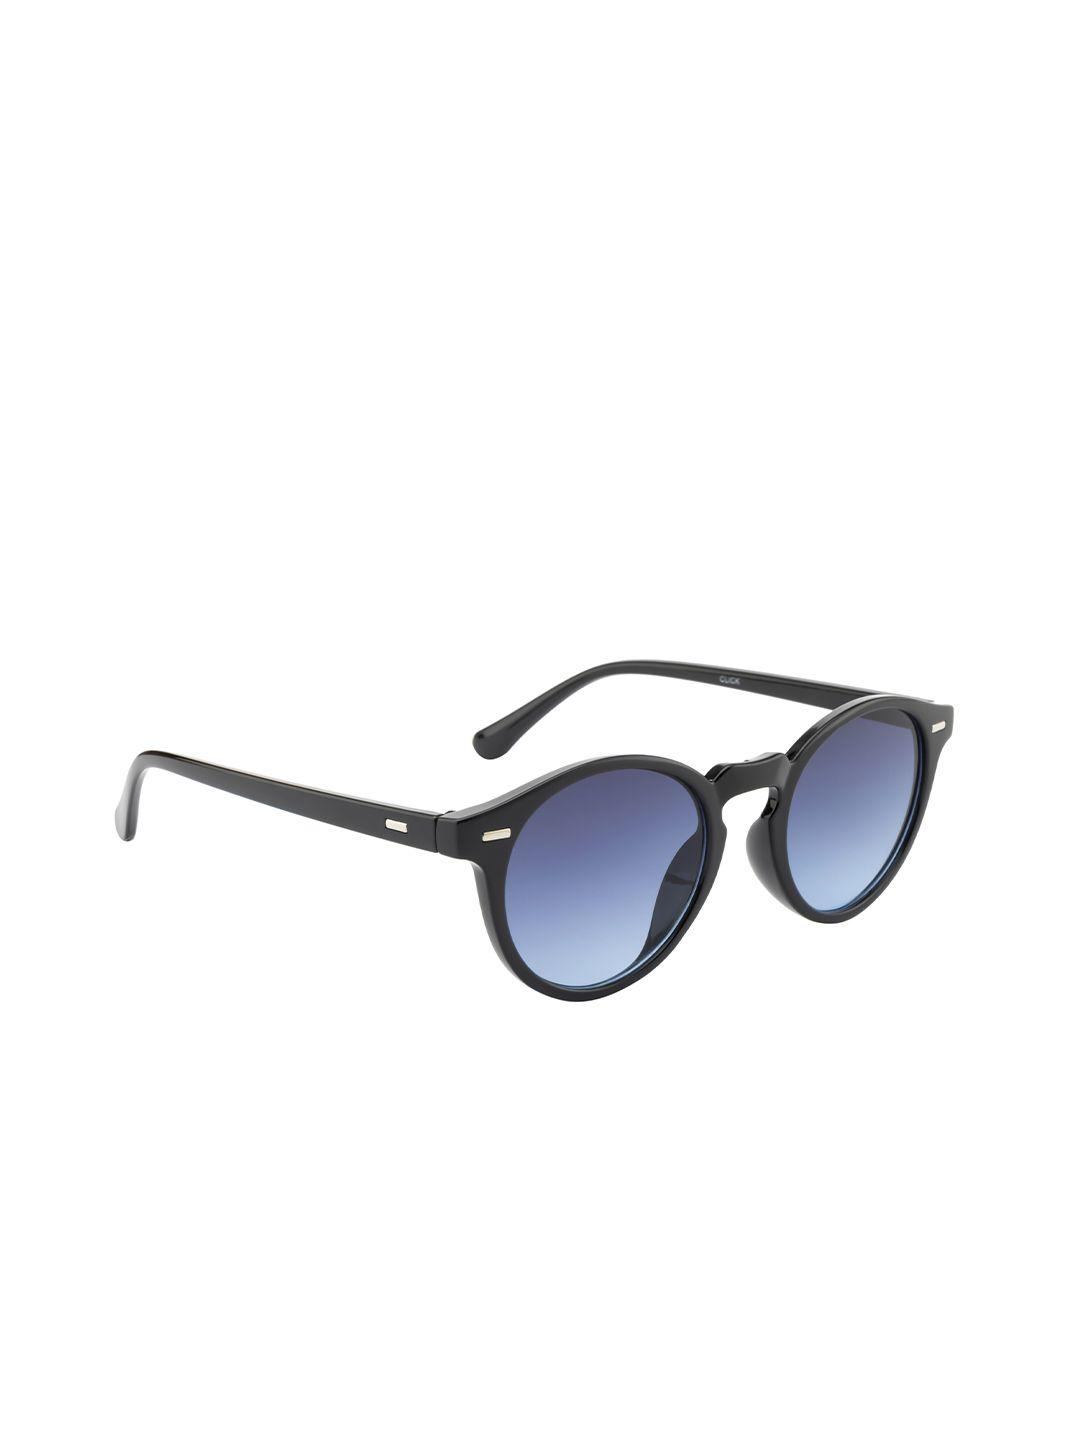 mast-&-harbour-full-rim-round-sunglasses-with-uv-protected-lens-mh-m25148